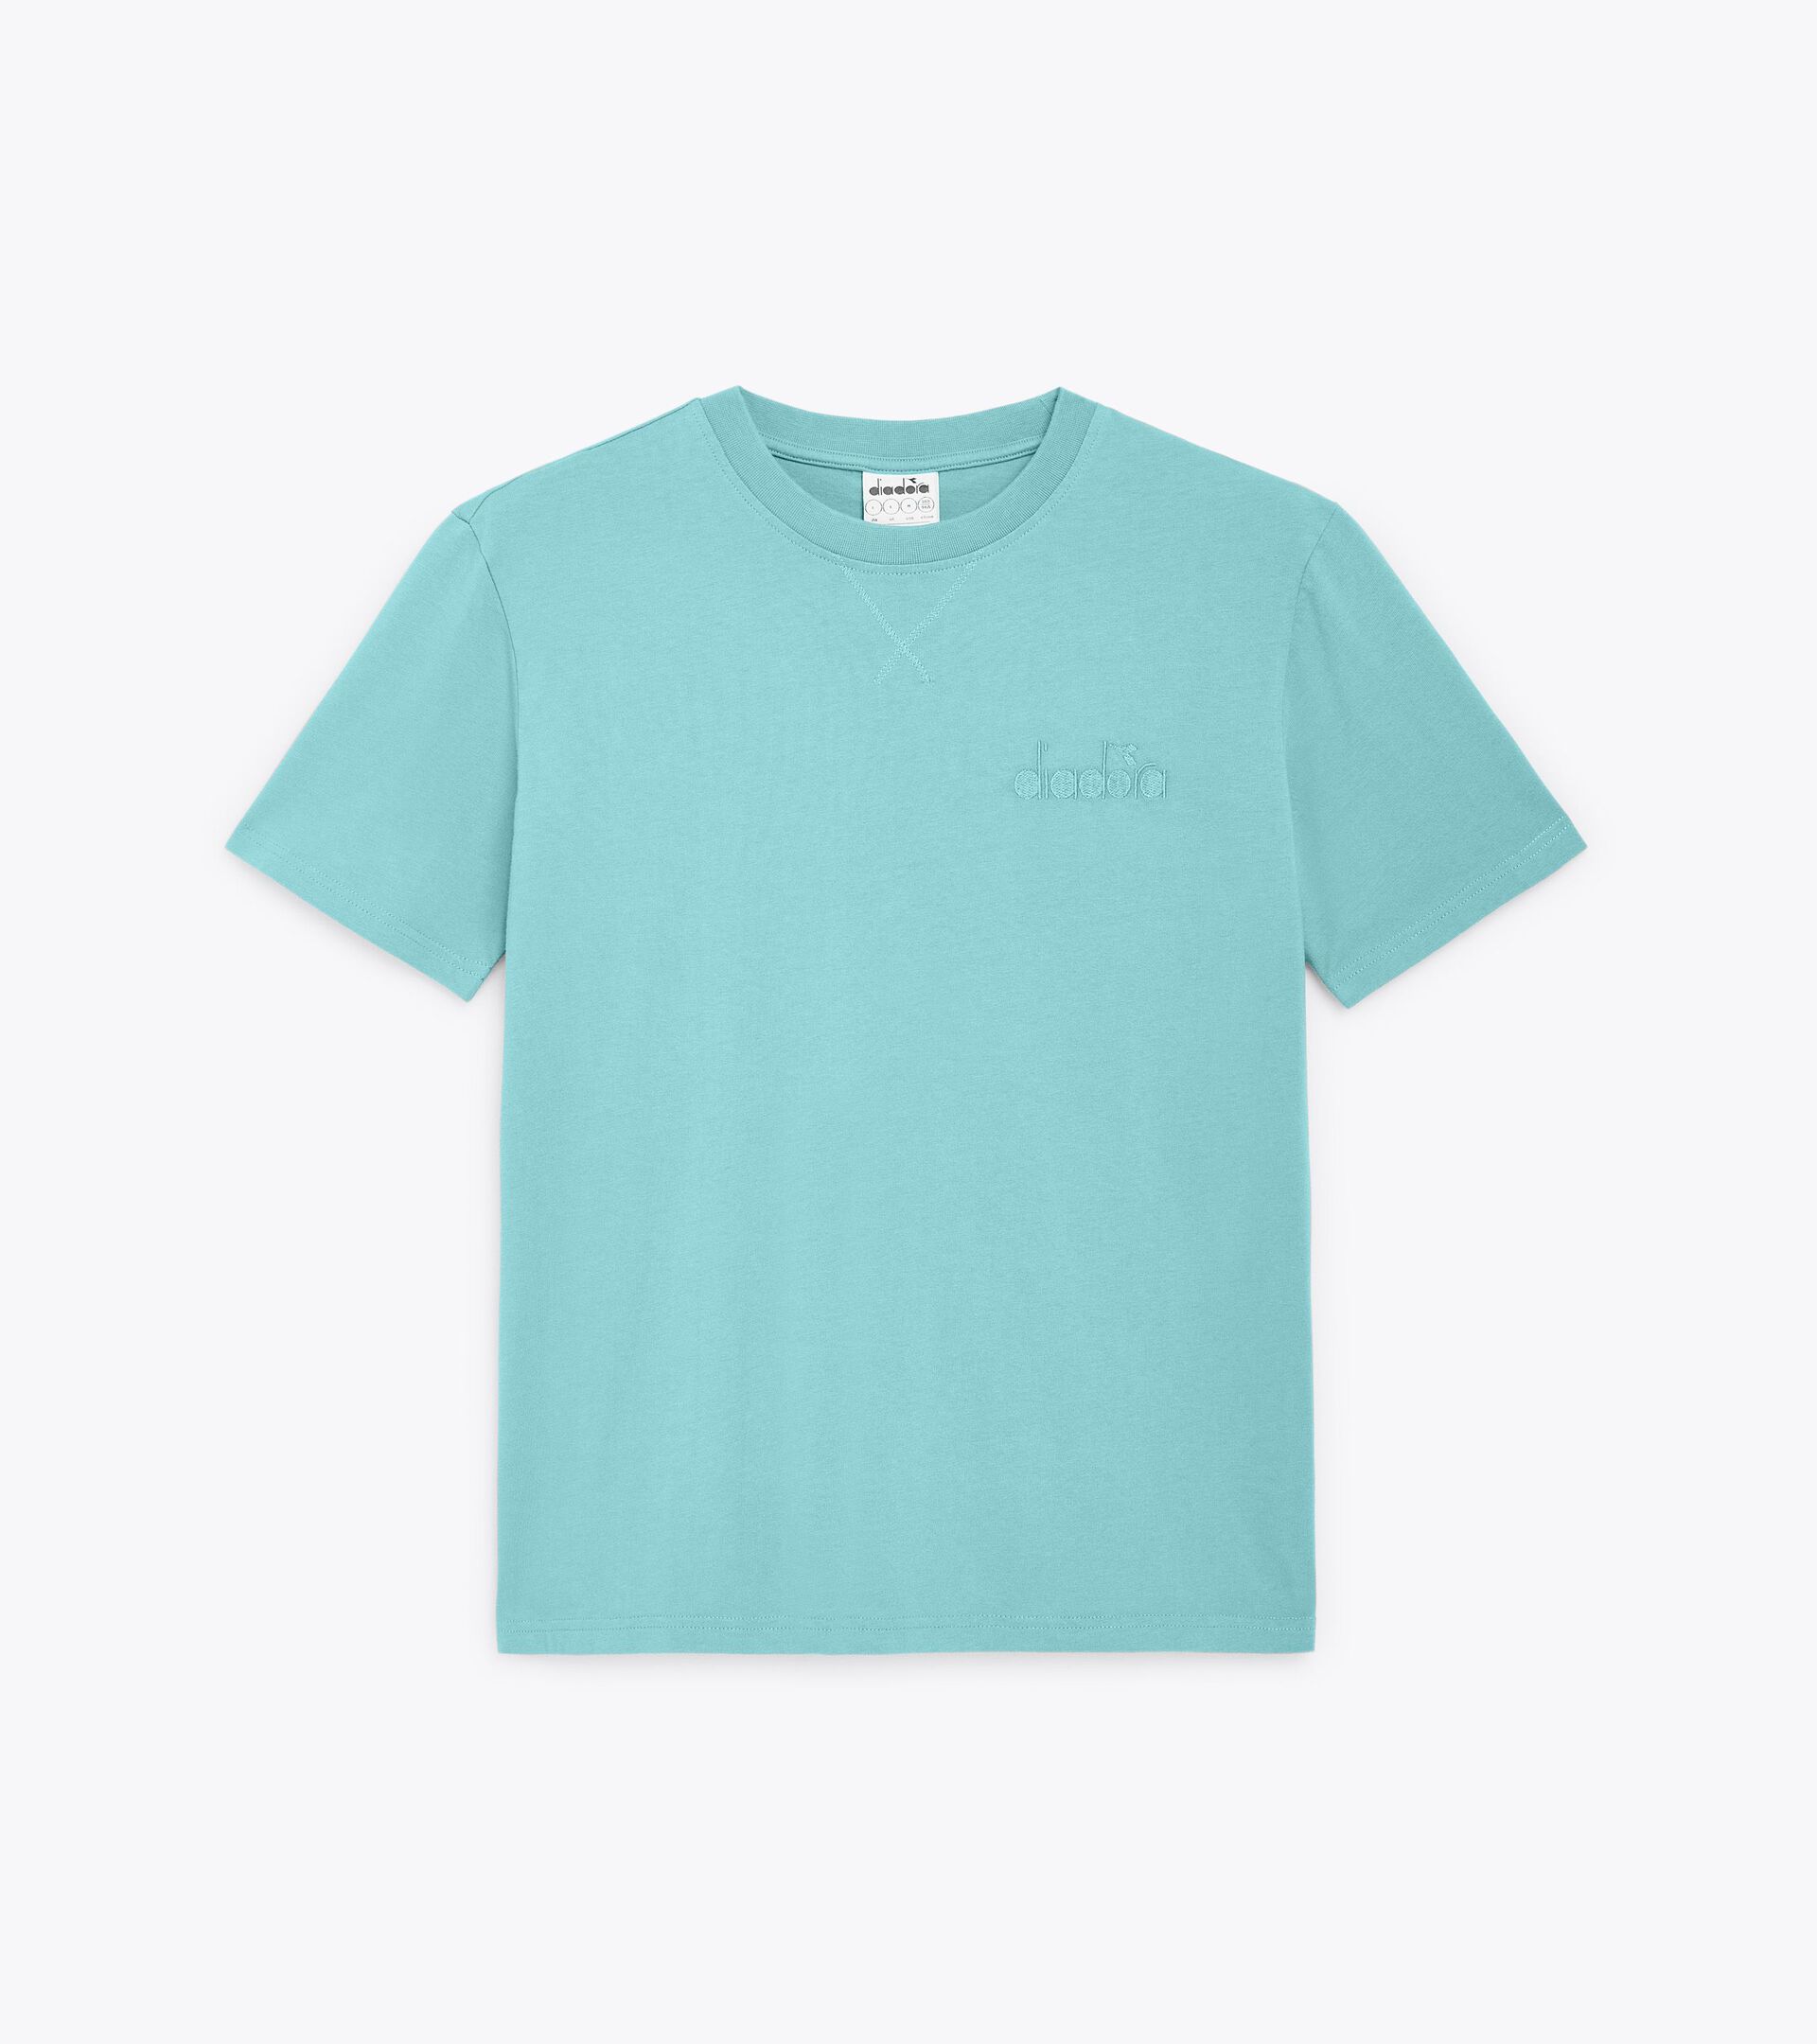 Camiseta - Gender neutral T-SHIRT SS ATHL. LOGO TURQUESA PASTELES - Diadora